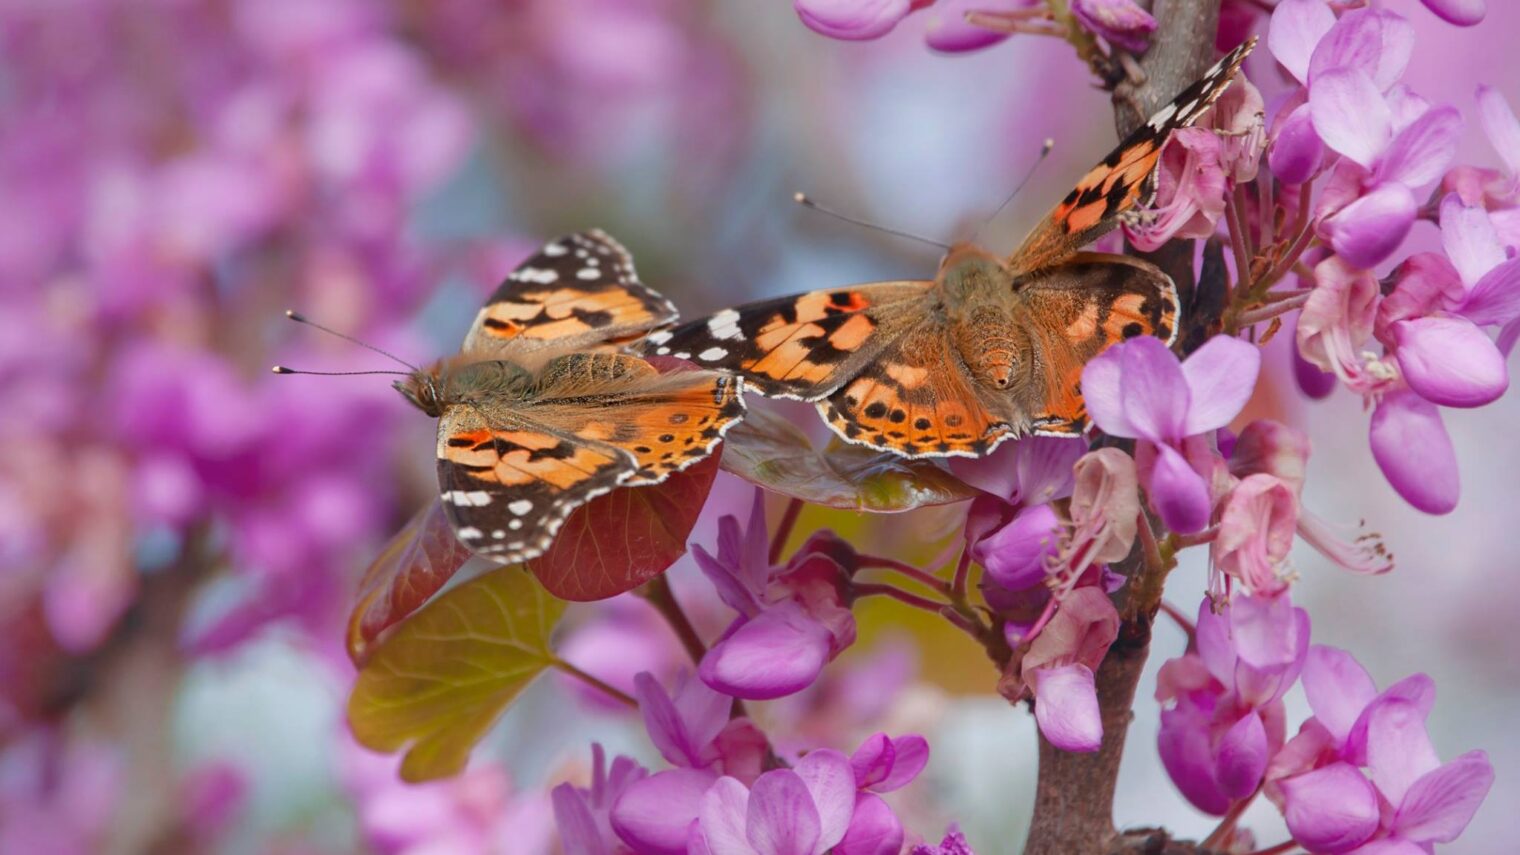 Painted Lady butterflies enjoying a flower snack. Photo by Dina Bersano